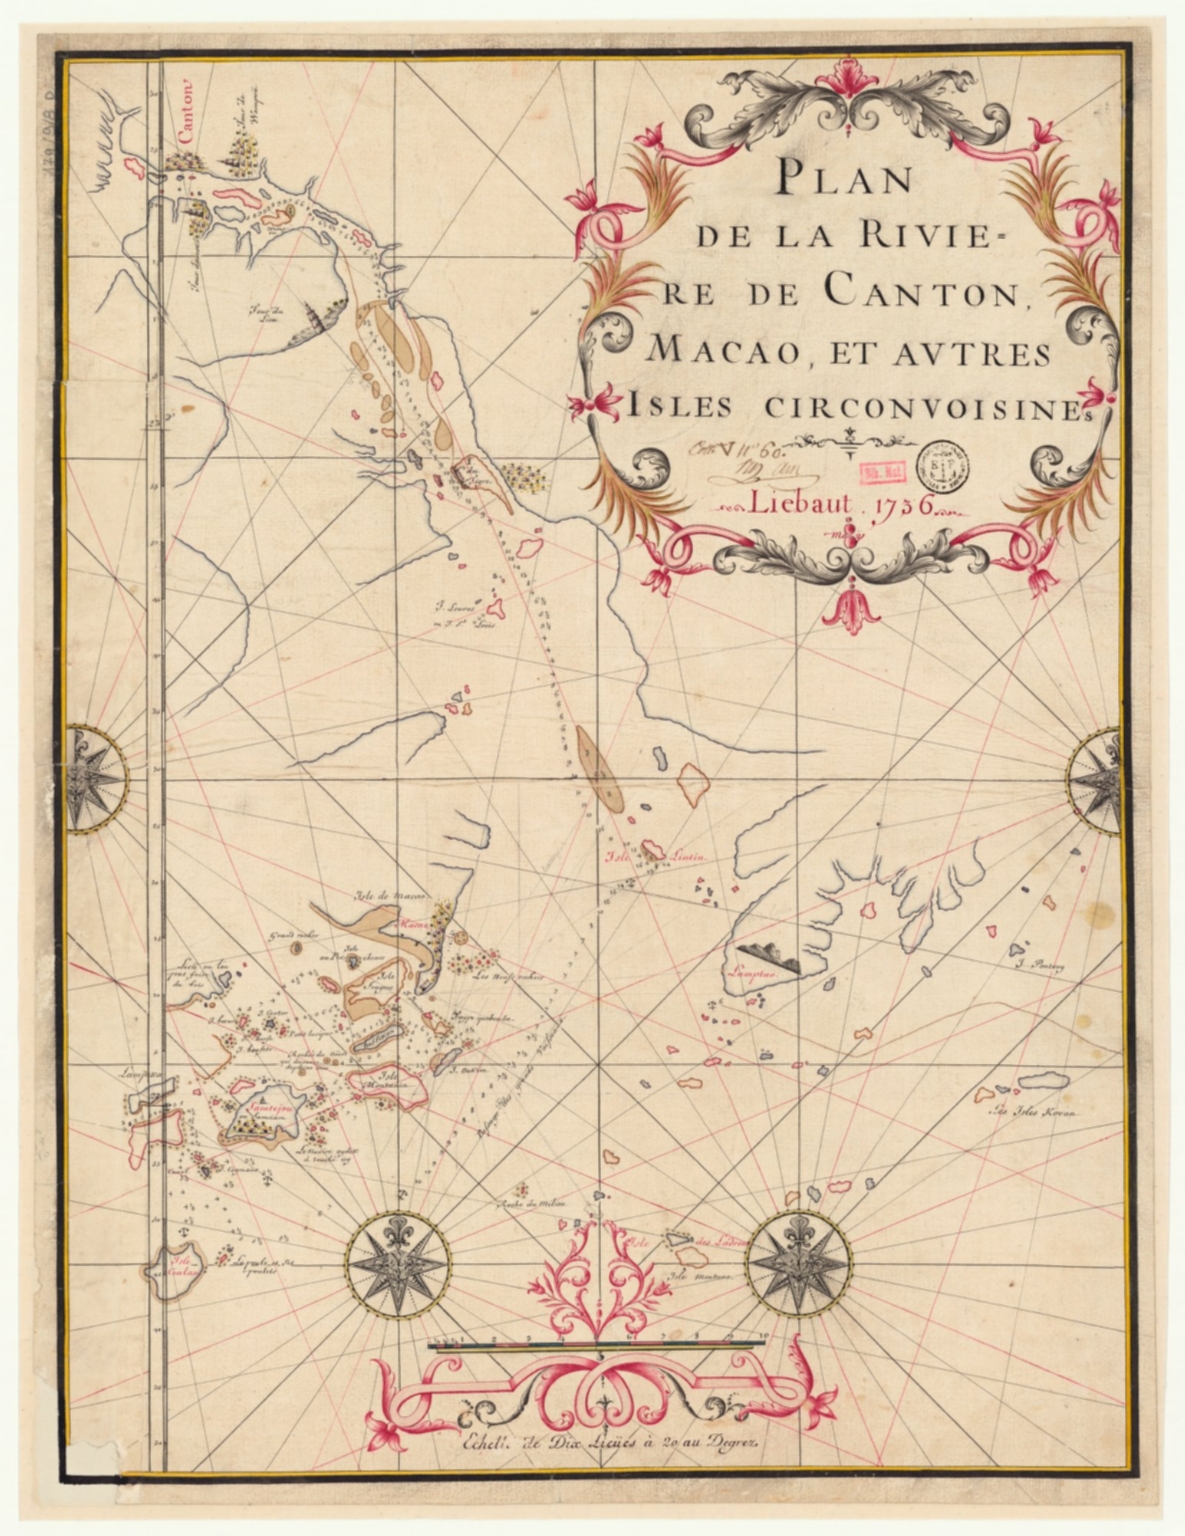 Plan de la riviere de Canton, Macao, et autres isles circonvoisines